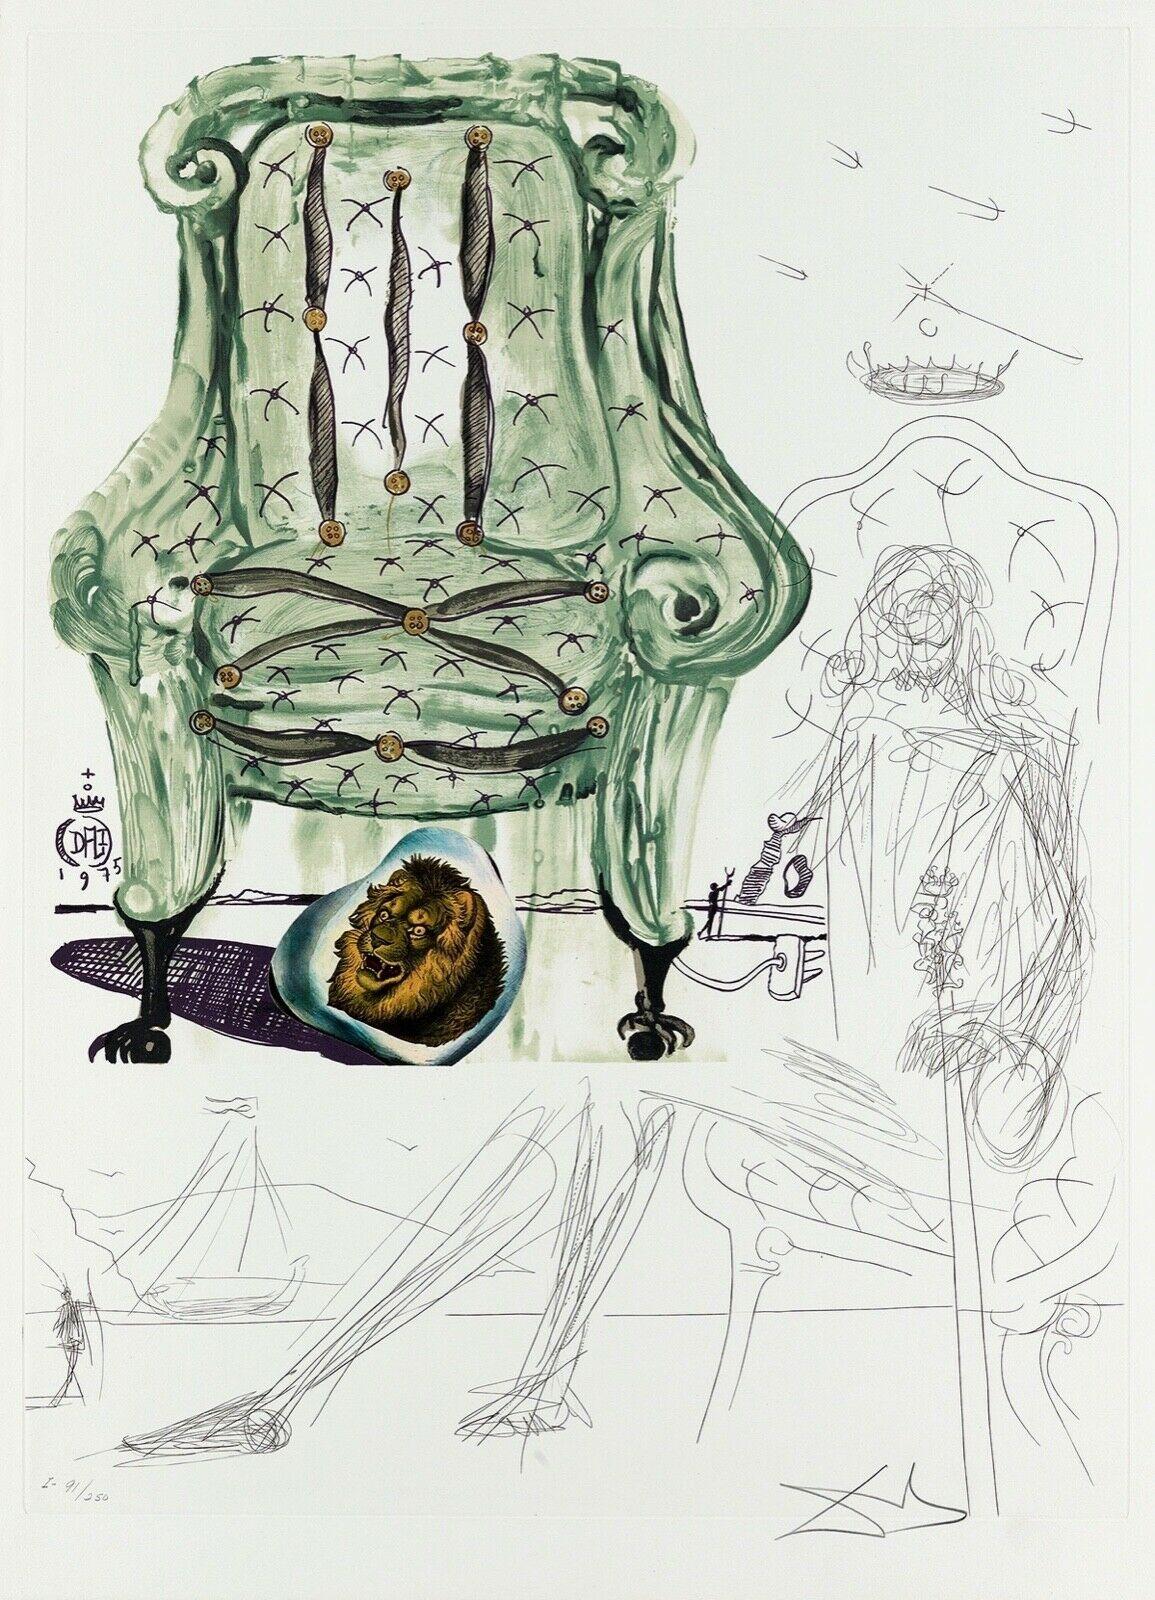 Salvador Dalí Landscape Print - Breathing Pneumatic Armchair (Imagination & Objects Portfolio), Salvador Dali